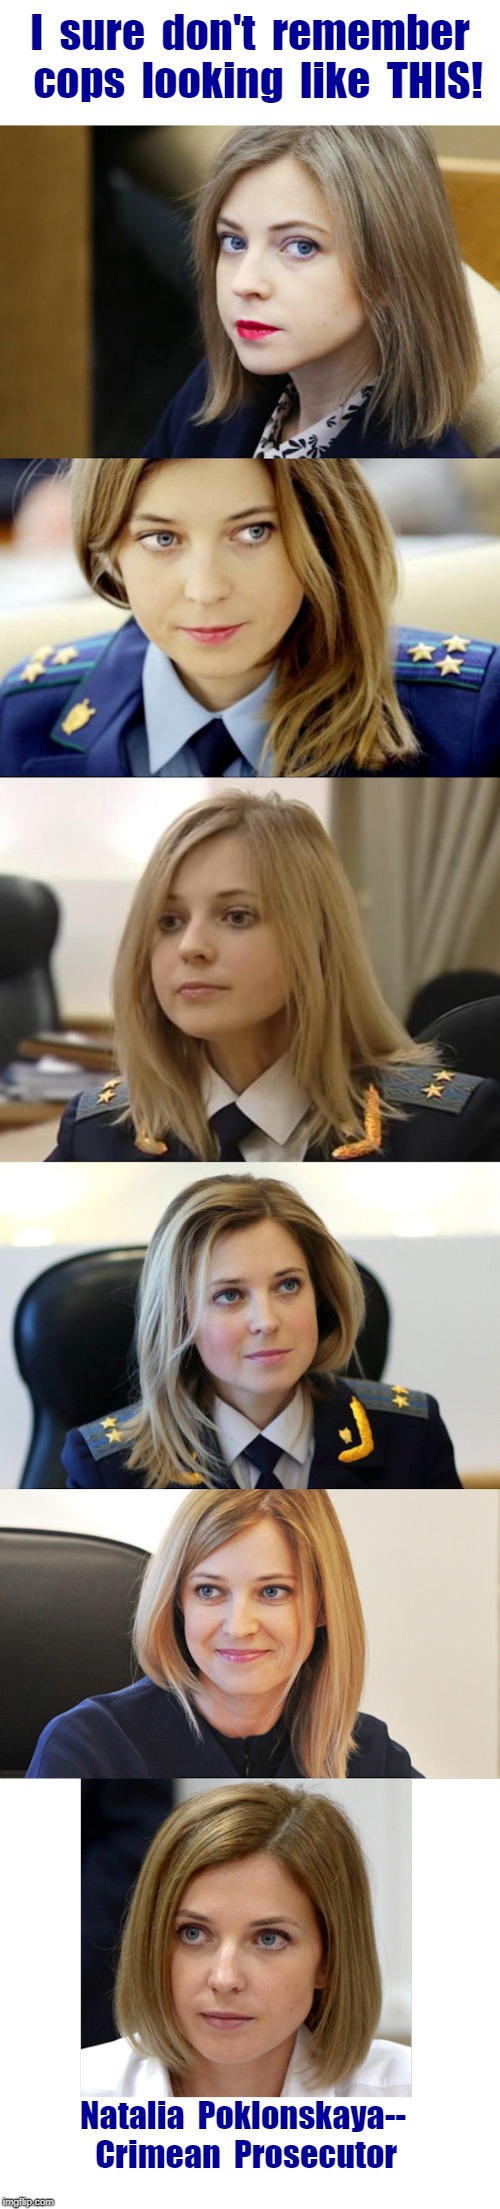 Natalia Poklonskaya, Deputy of State Duma of Russia | I  sure  don't  remember  cops  looking  like  THIS! Natalia  Poklonskaya--  Crimean  Prosecutor | image tagged in natalia poklonskaya hot blonde 8,memes,blondes,hottie | made w/ Imgflip meme maker